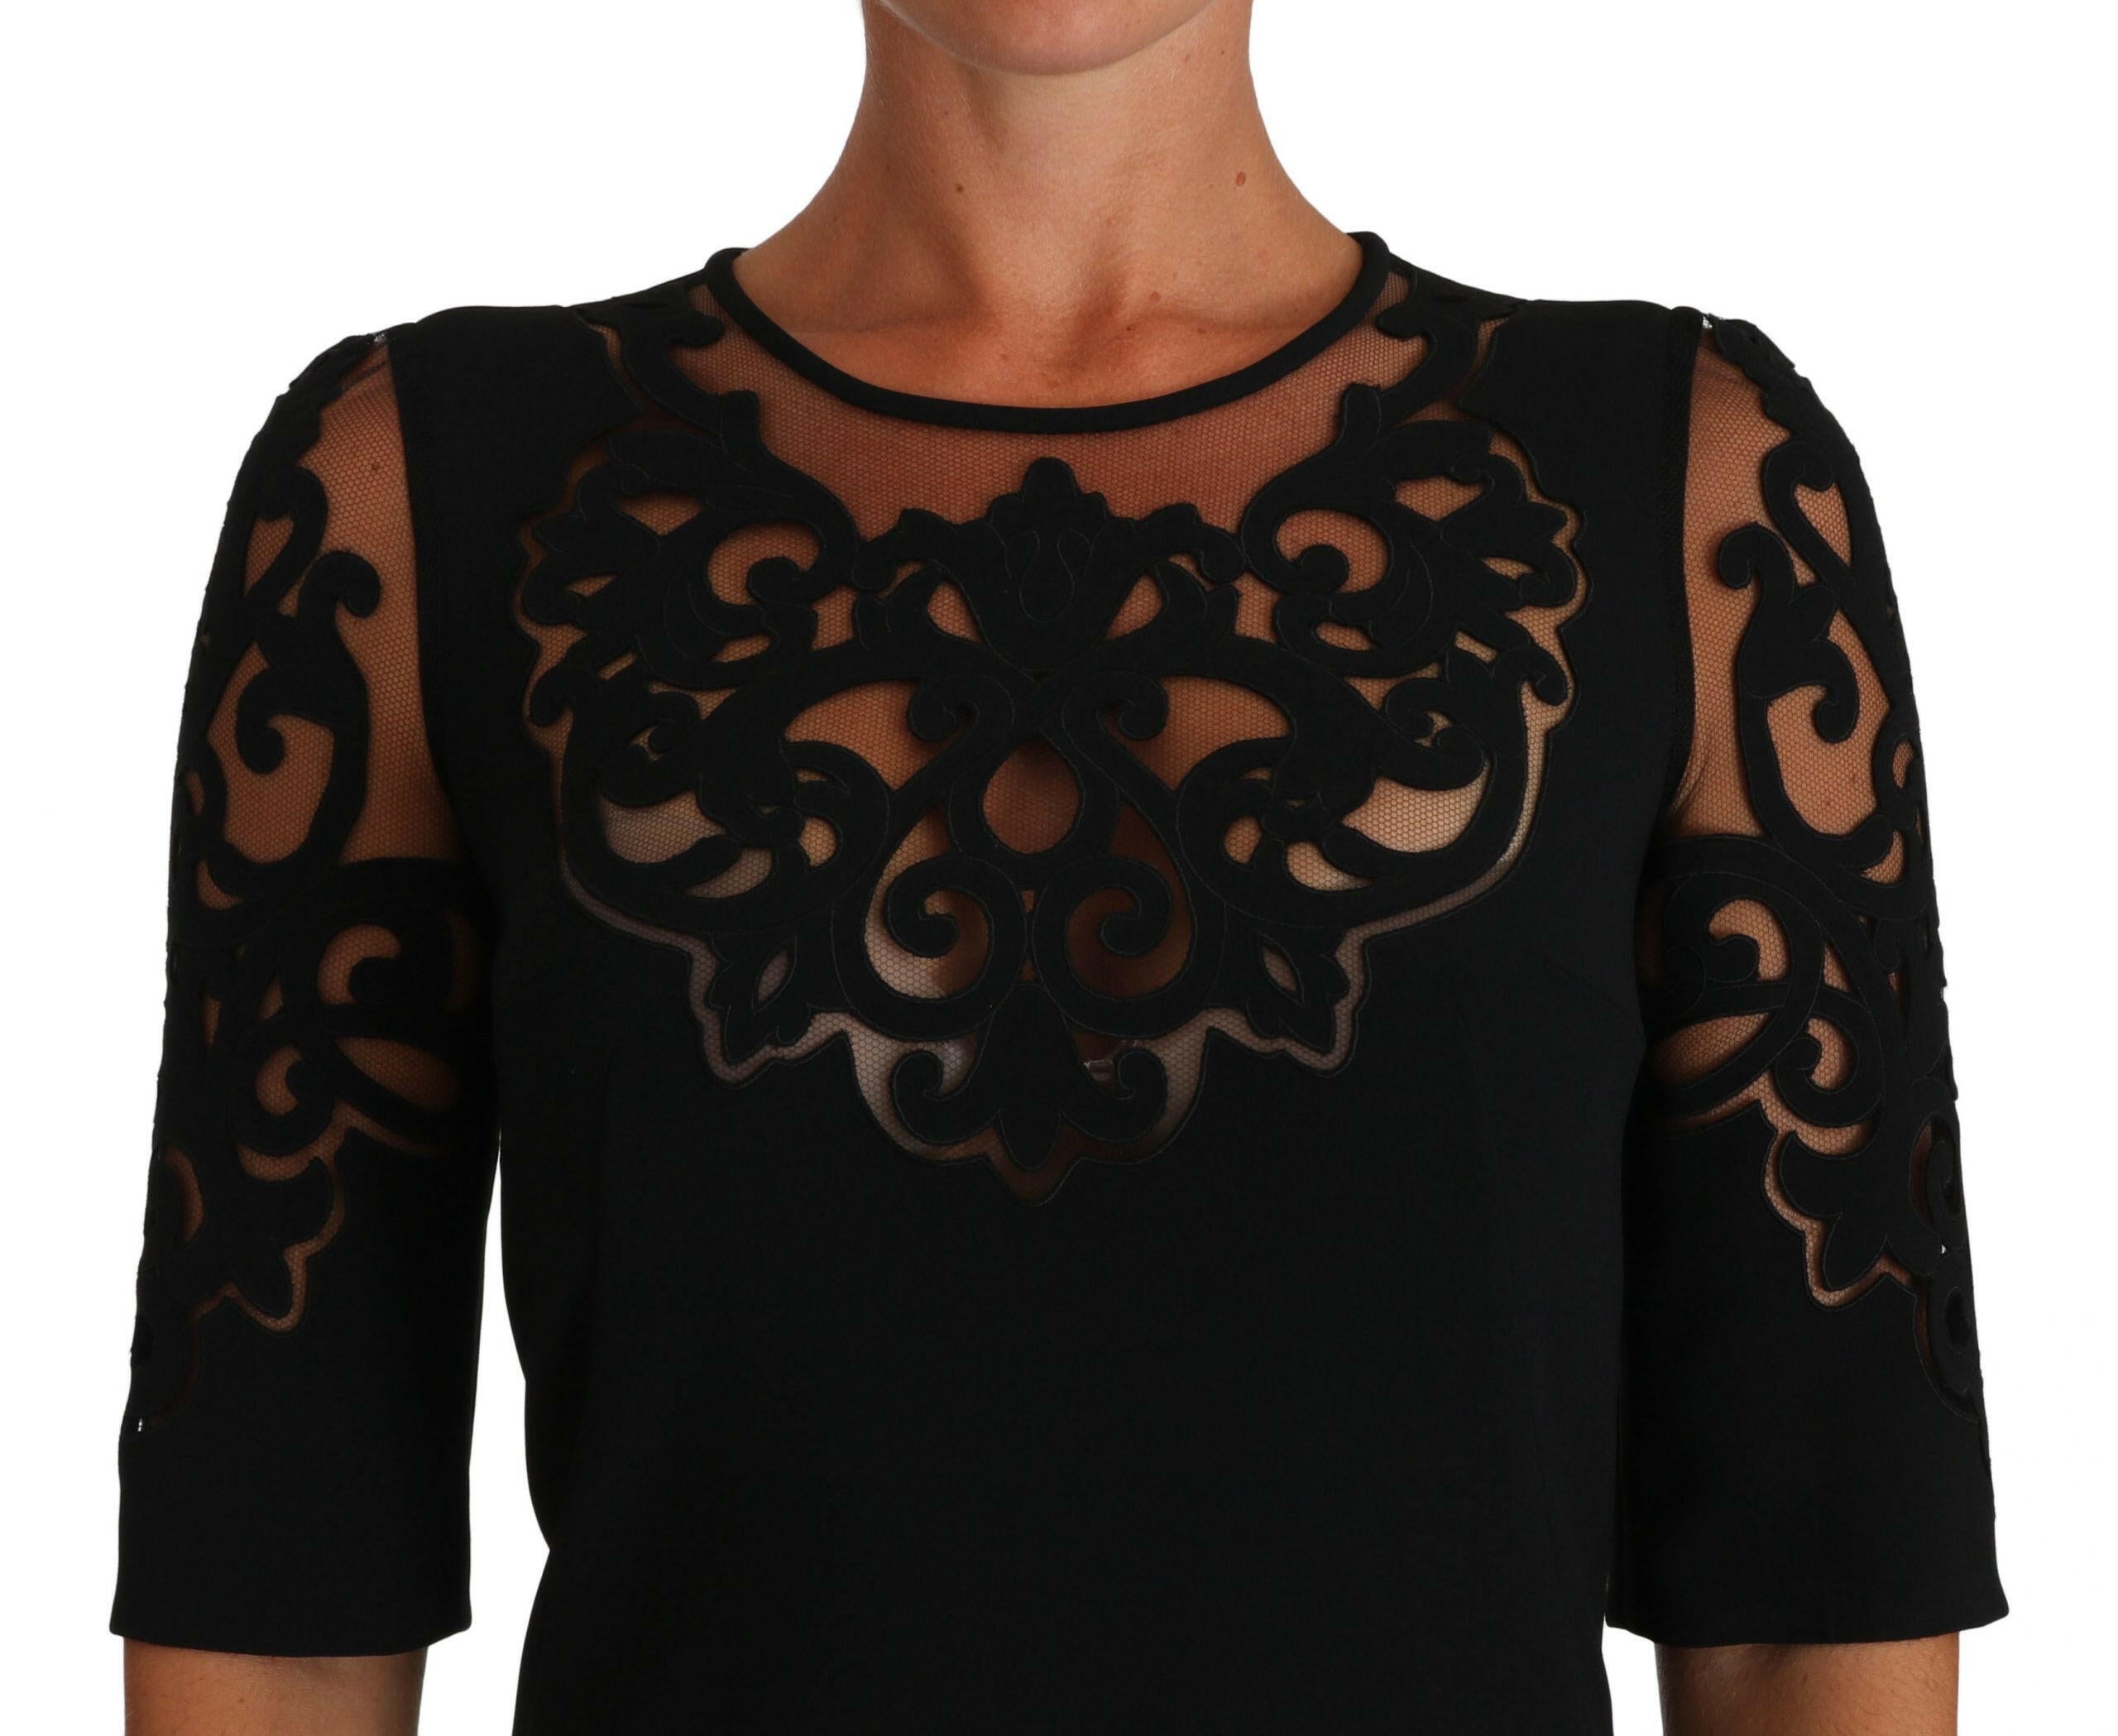 Dolce & Gabbana Elegant Black Cut-Out Detail Dress.